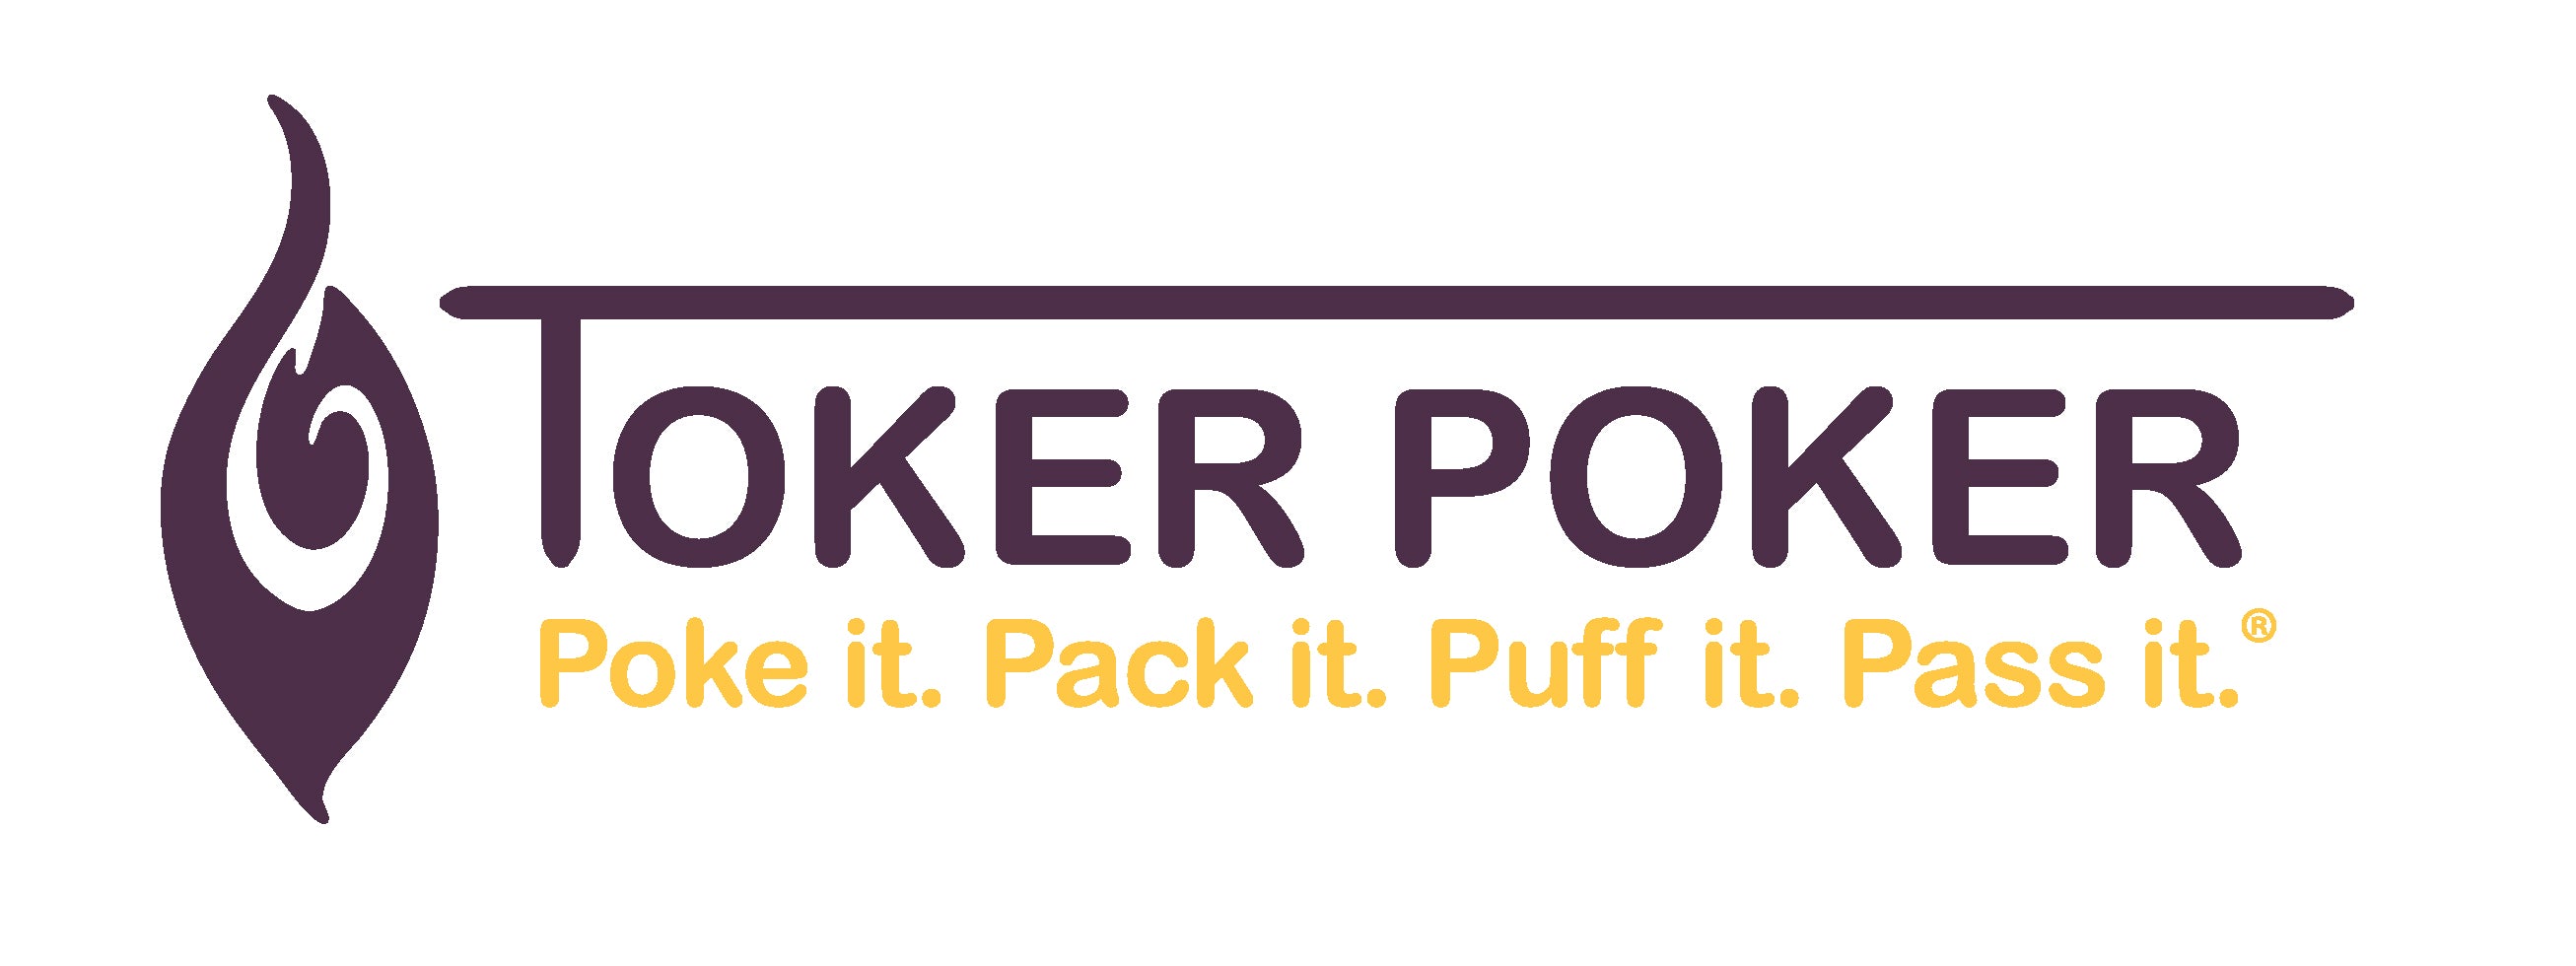 Toker Poker – A Friend Indeed Australia